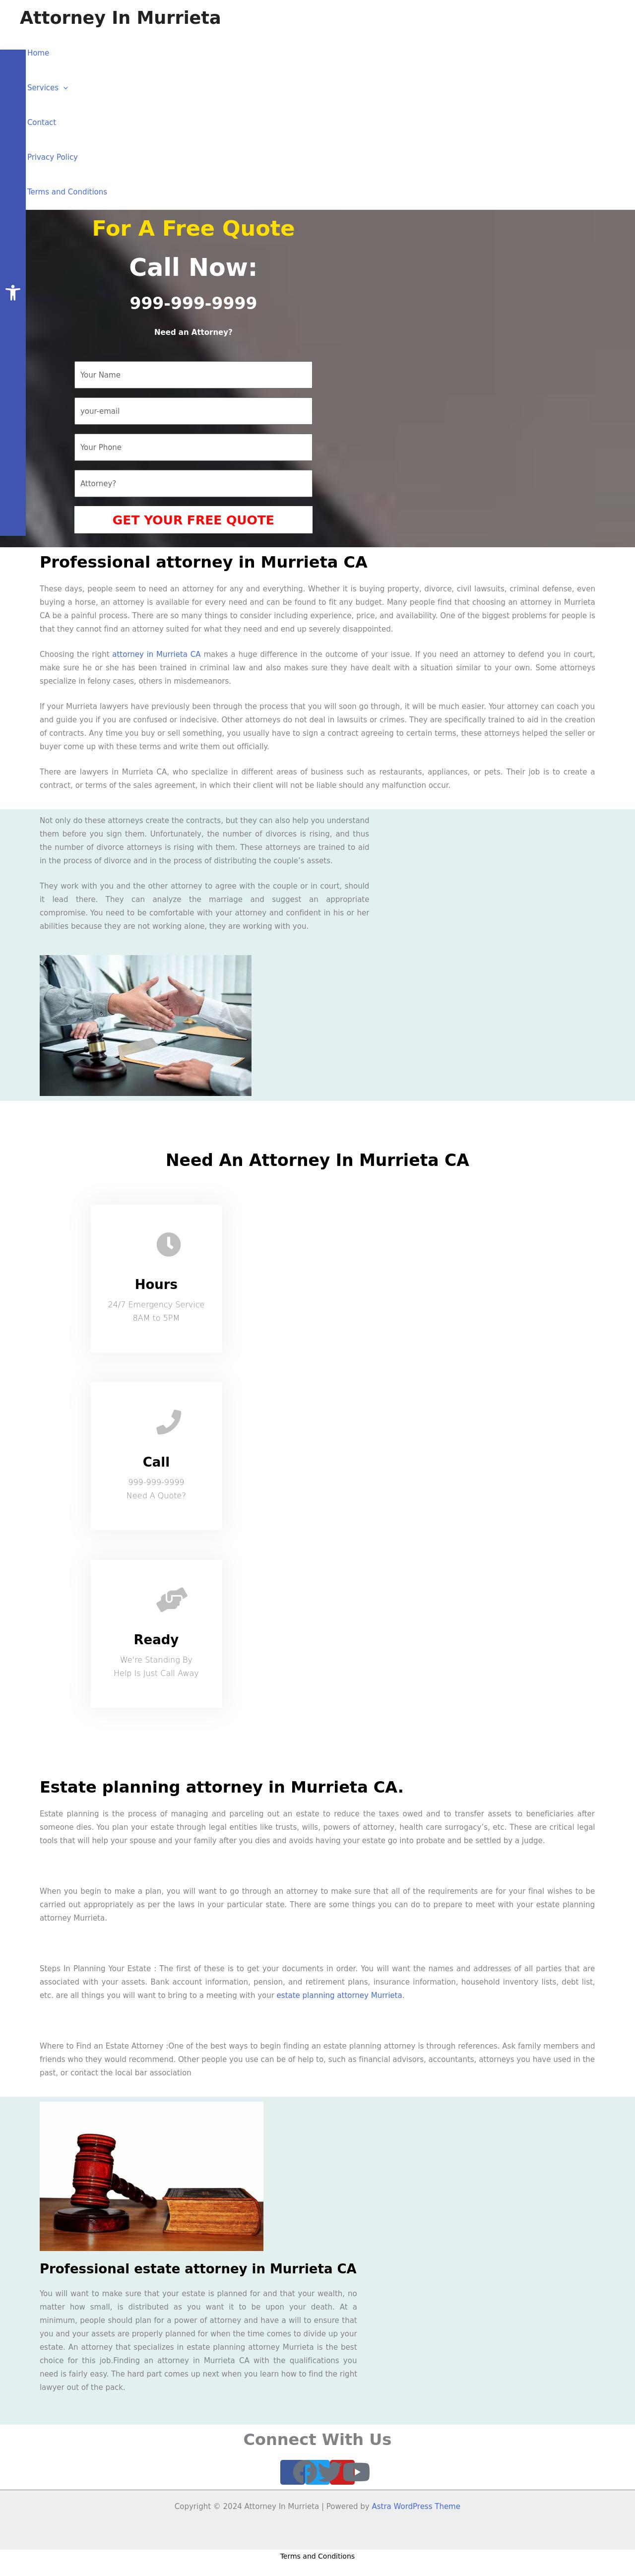 Attorney In Murrieta - Murrieta CA Lawyers